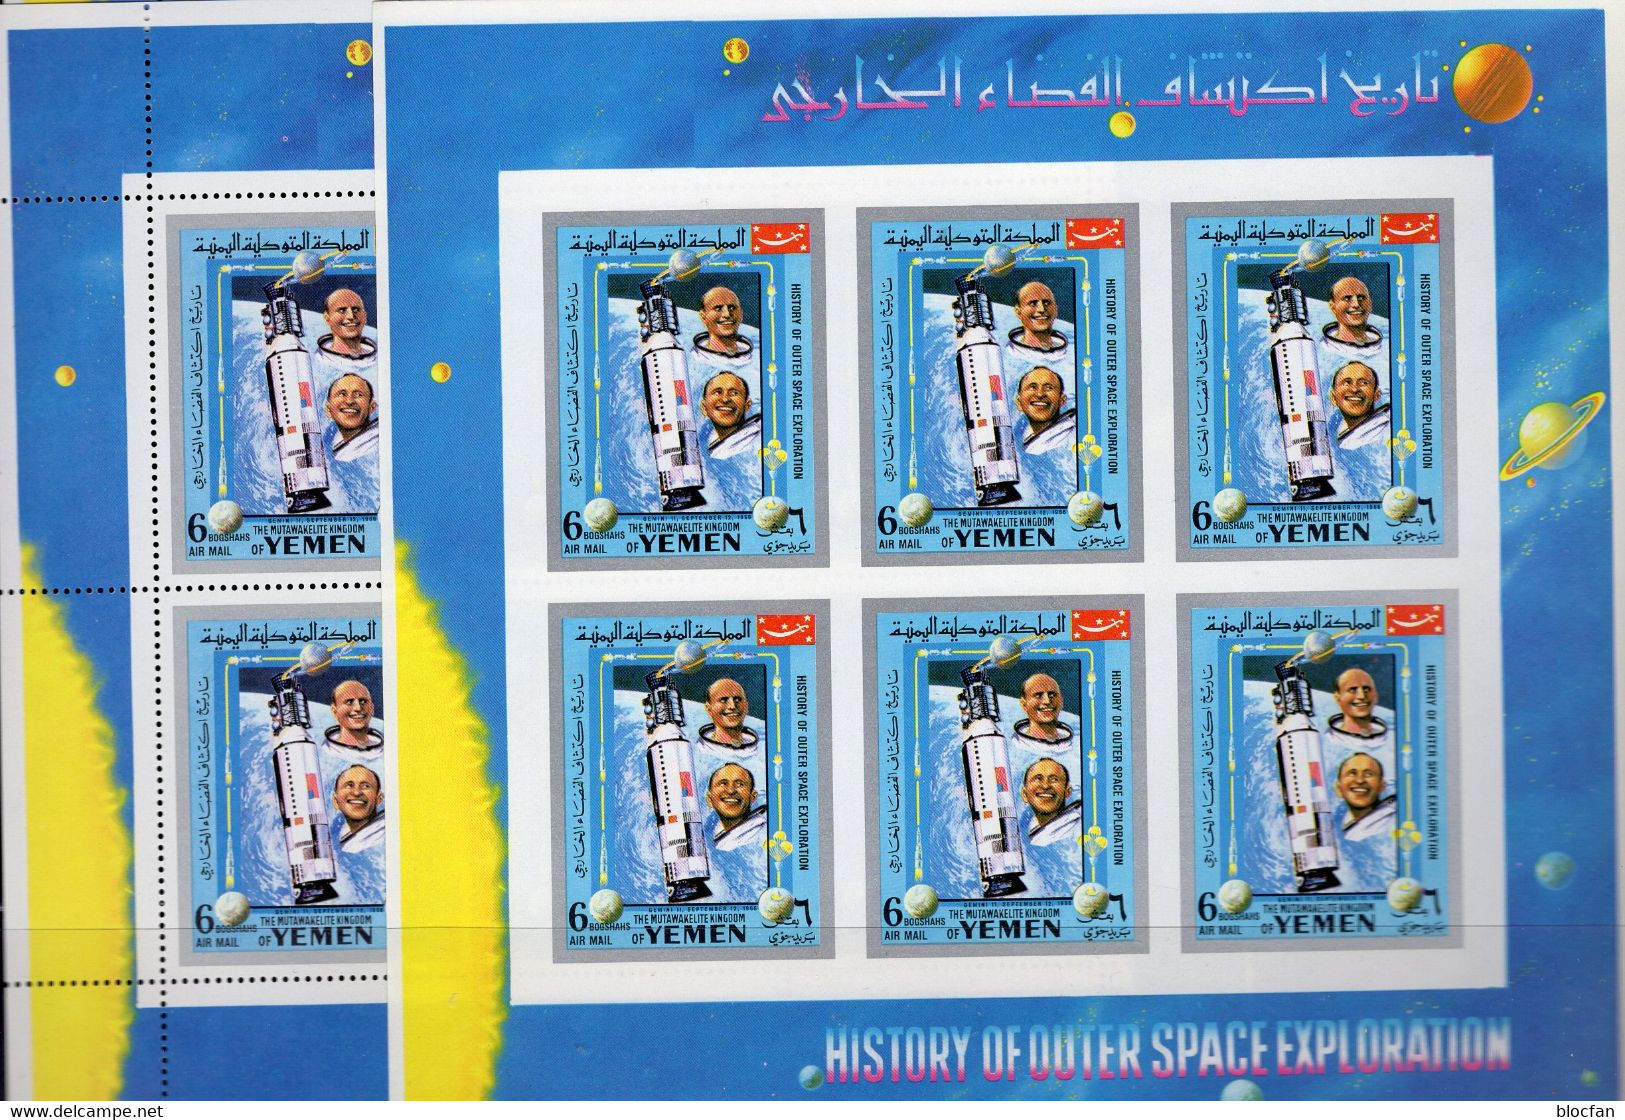 Astronauten 1966 Jemen 876 Kleinbogen A/B ** 12€ Rakete Gemini 11 Sheets Hoja Sheetlets Bf History Space Exploration - Perfins